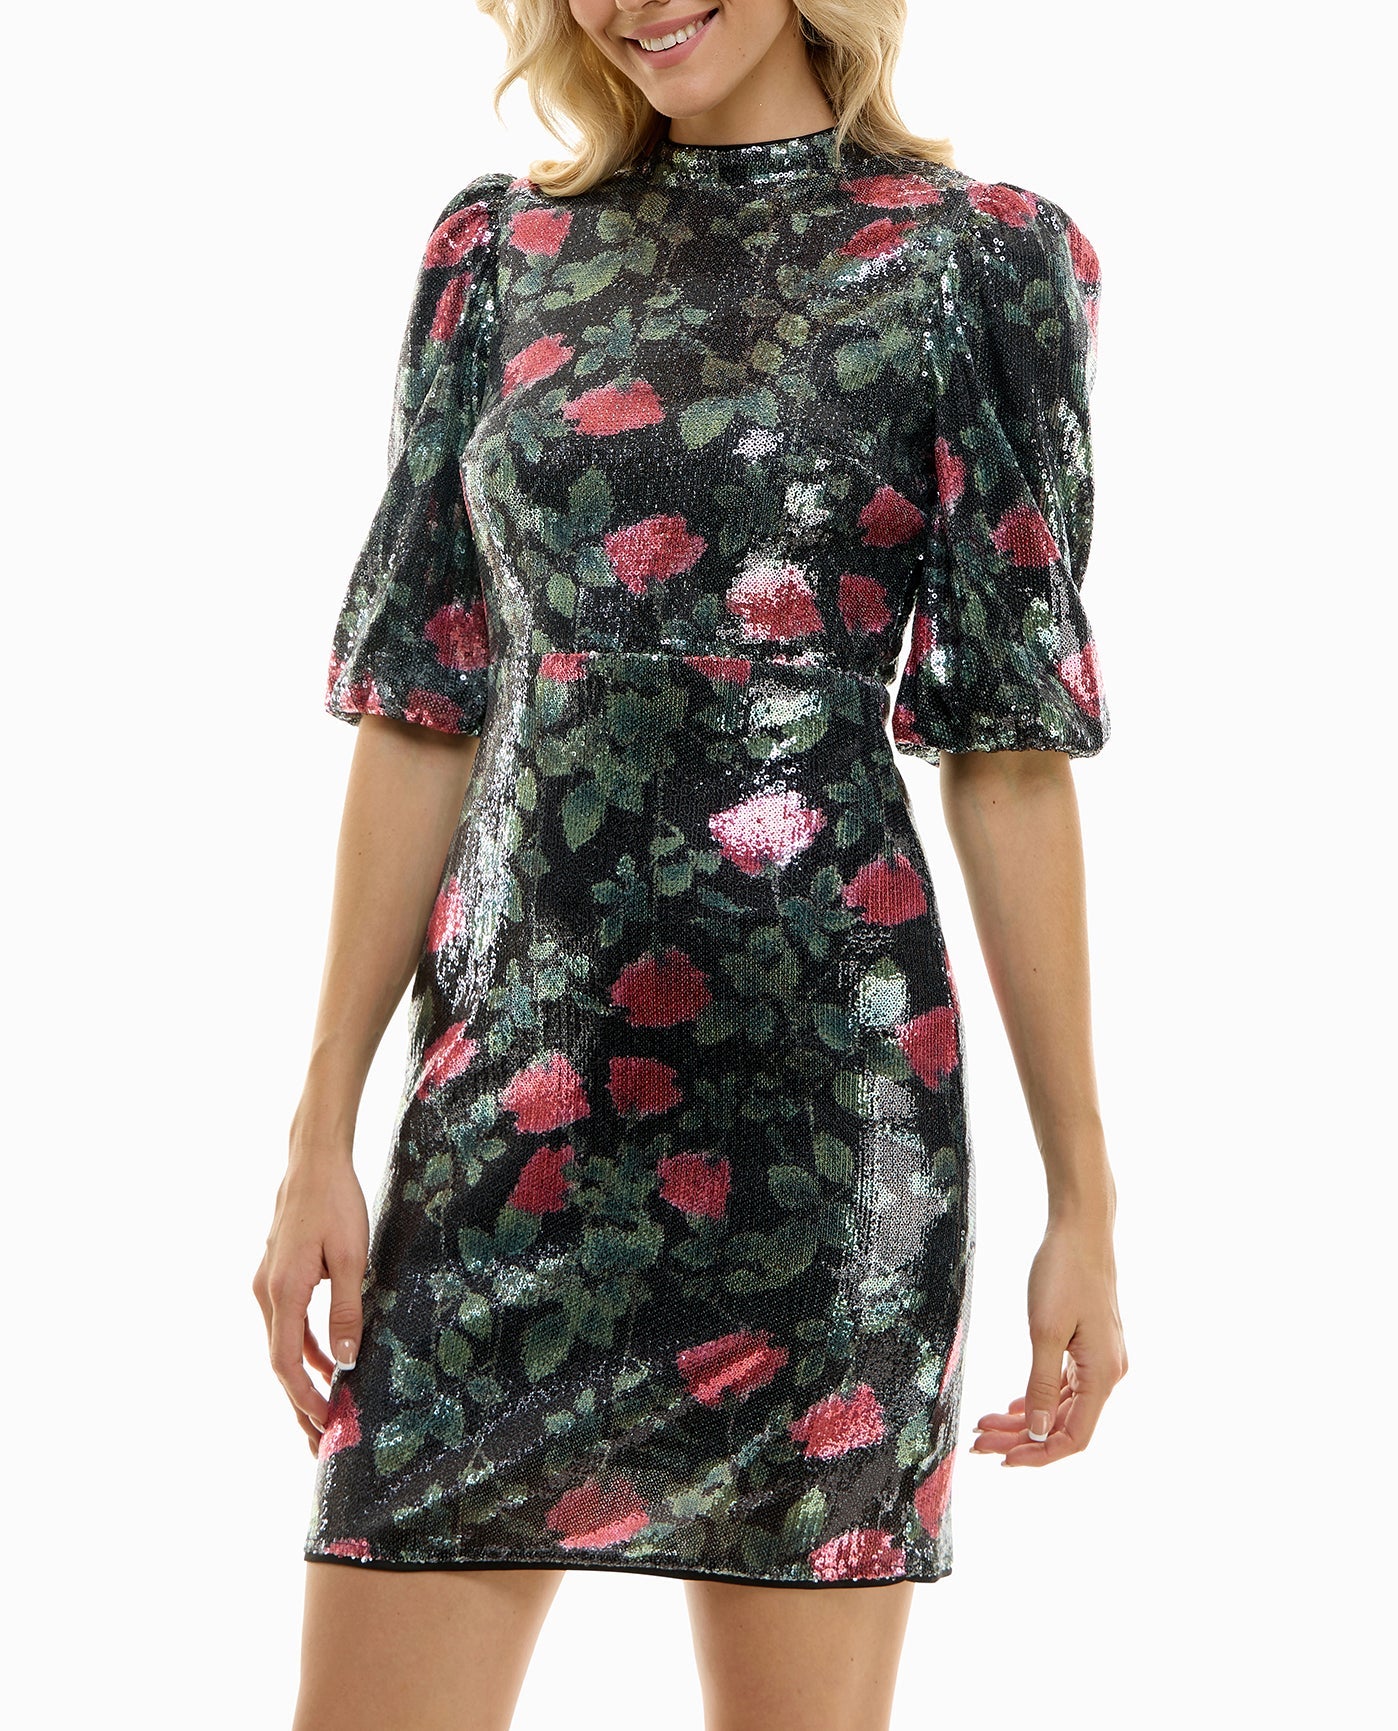 ZOOMED FRONT OF MARISOL SEQUIN A-LINE DRESS | Black Rose Print